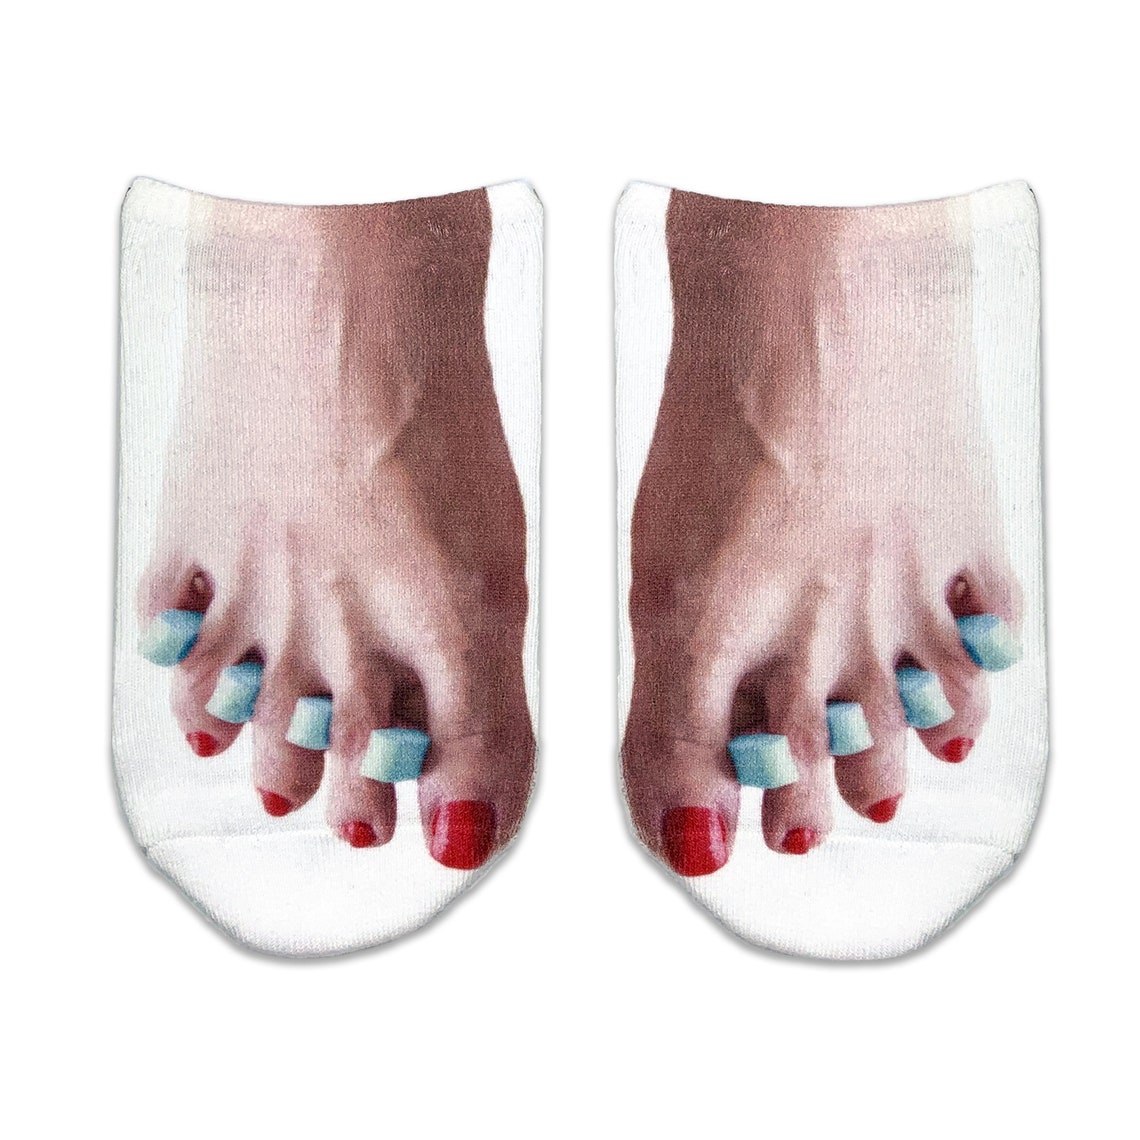 Funny No Show Socks for Women Goofy Socks with Feet Image | Etsy